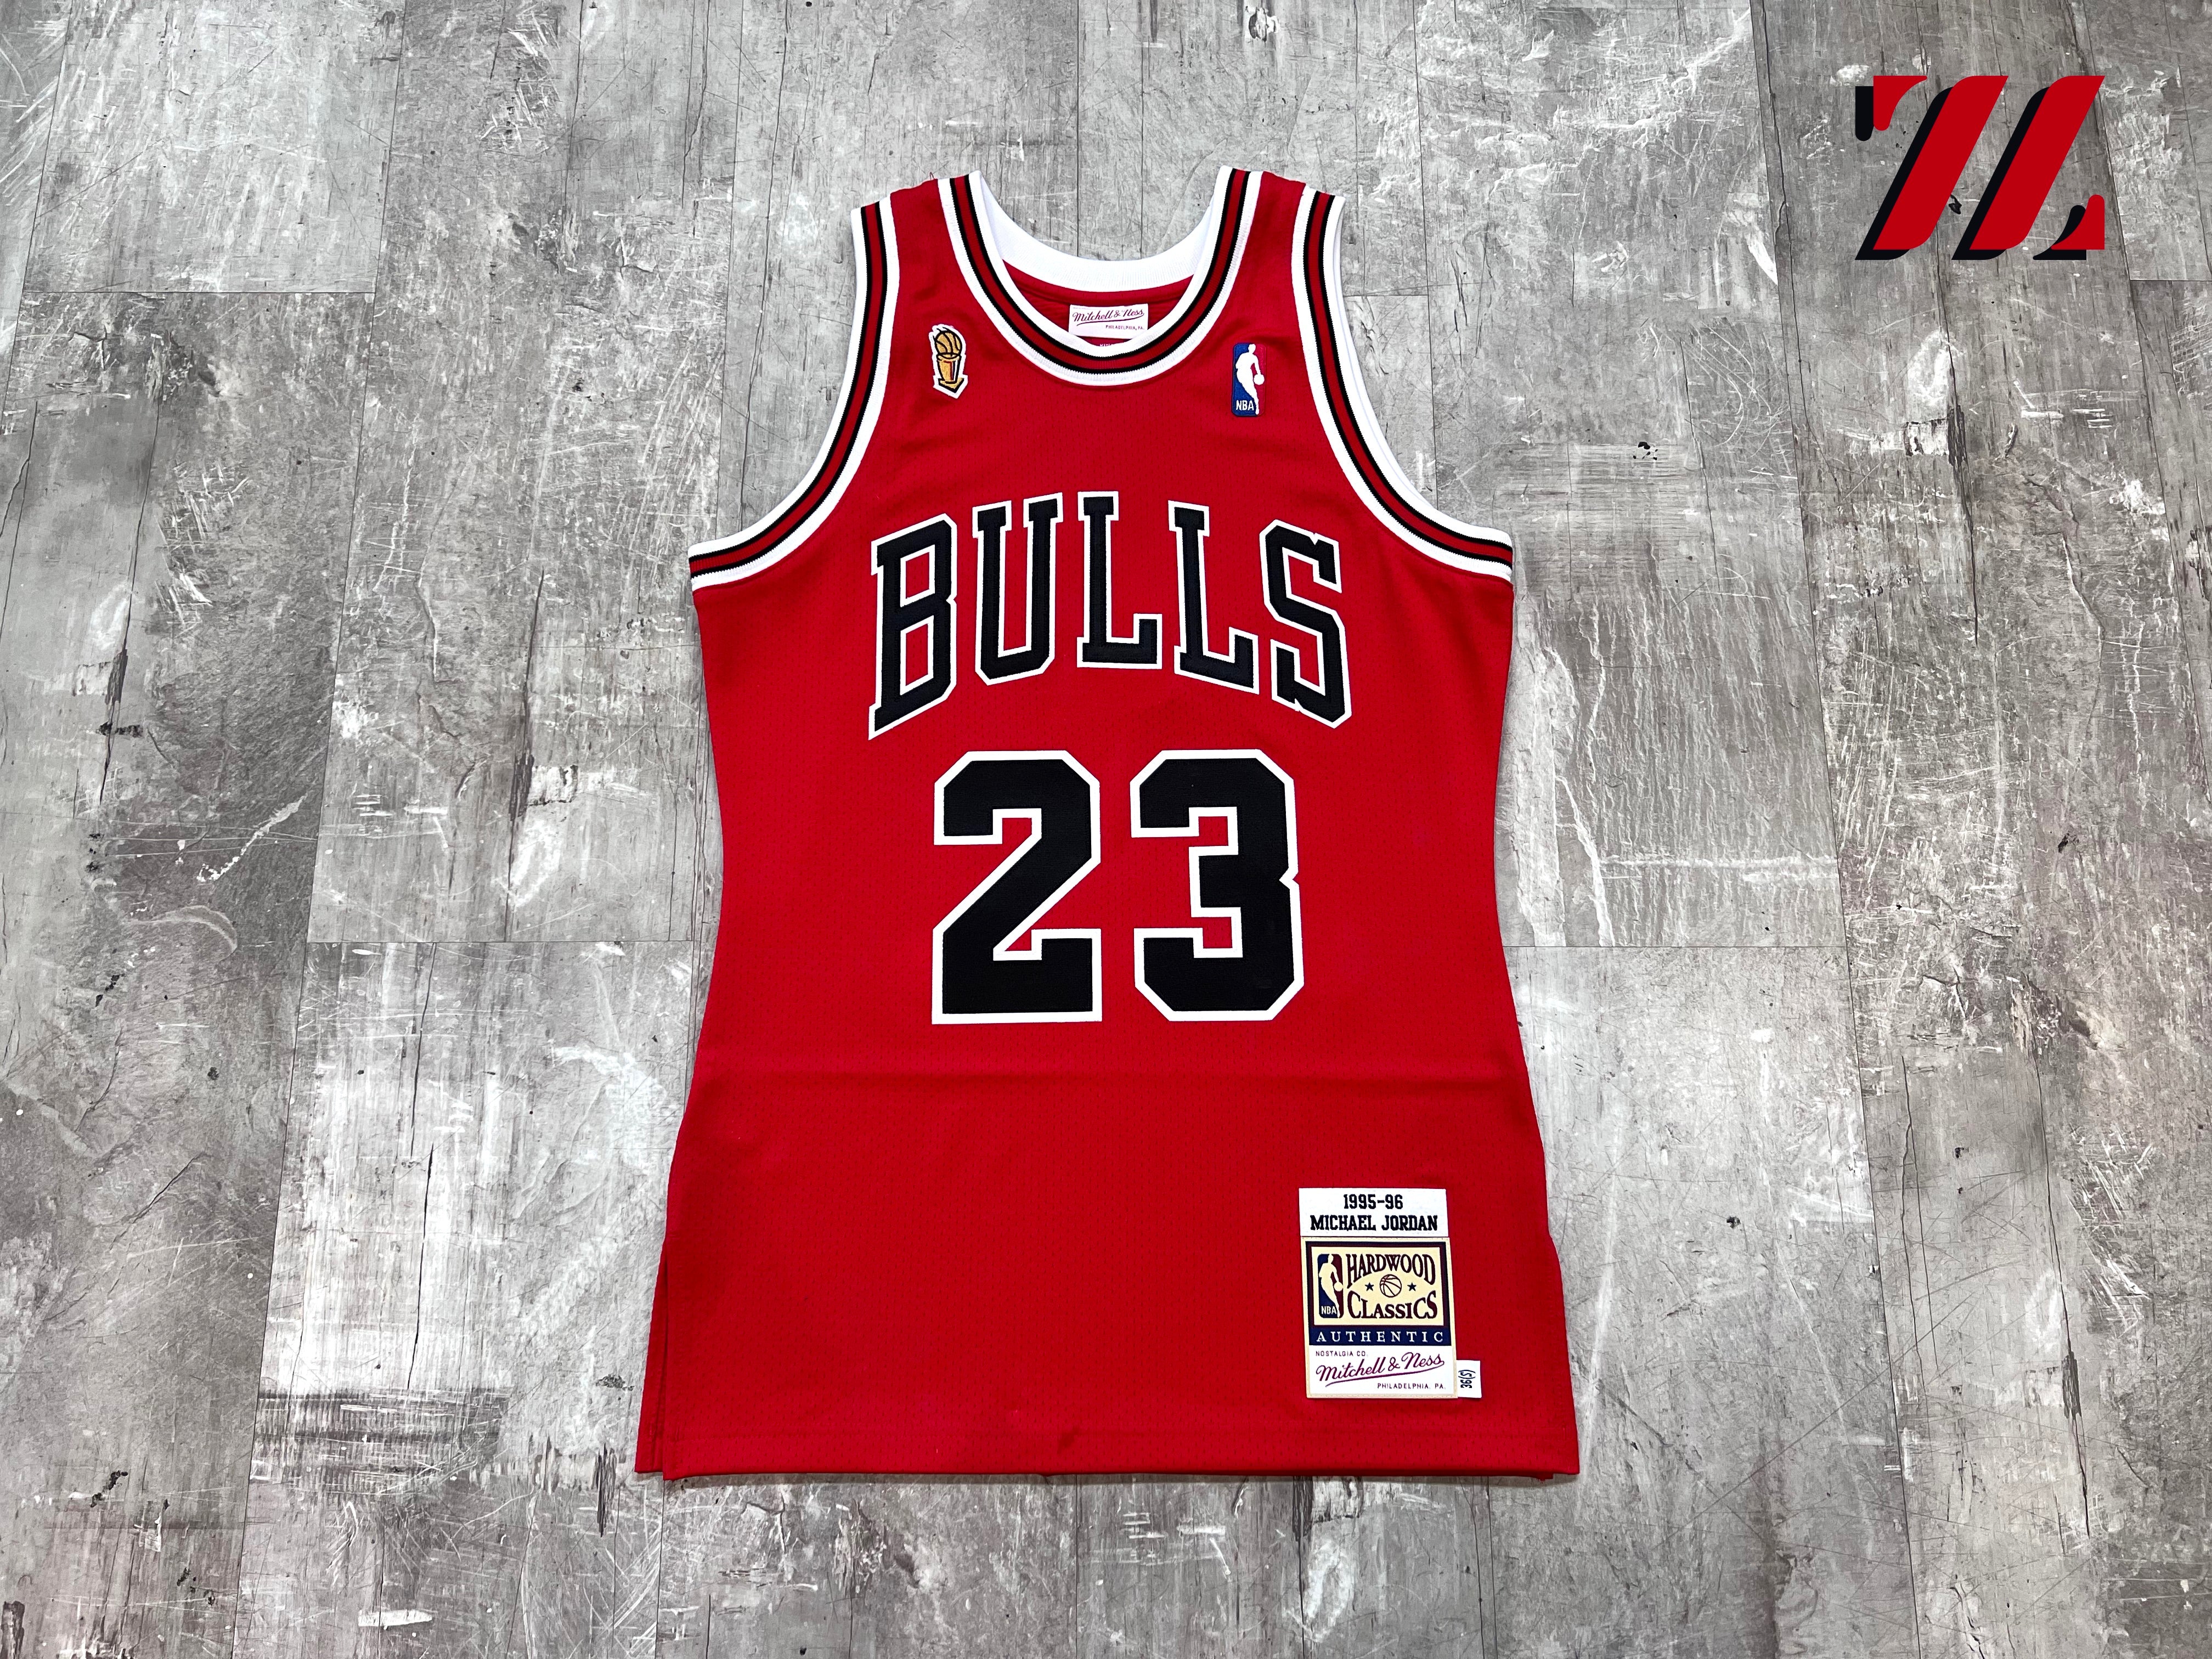 Men's Chicago Bulls 23 Michael Jordan basketball jersey mitchell